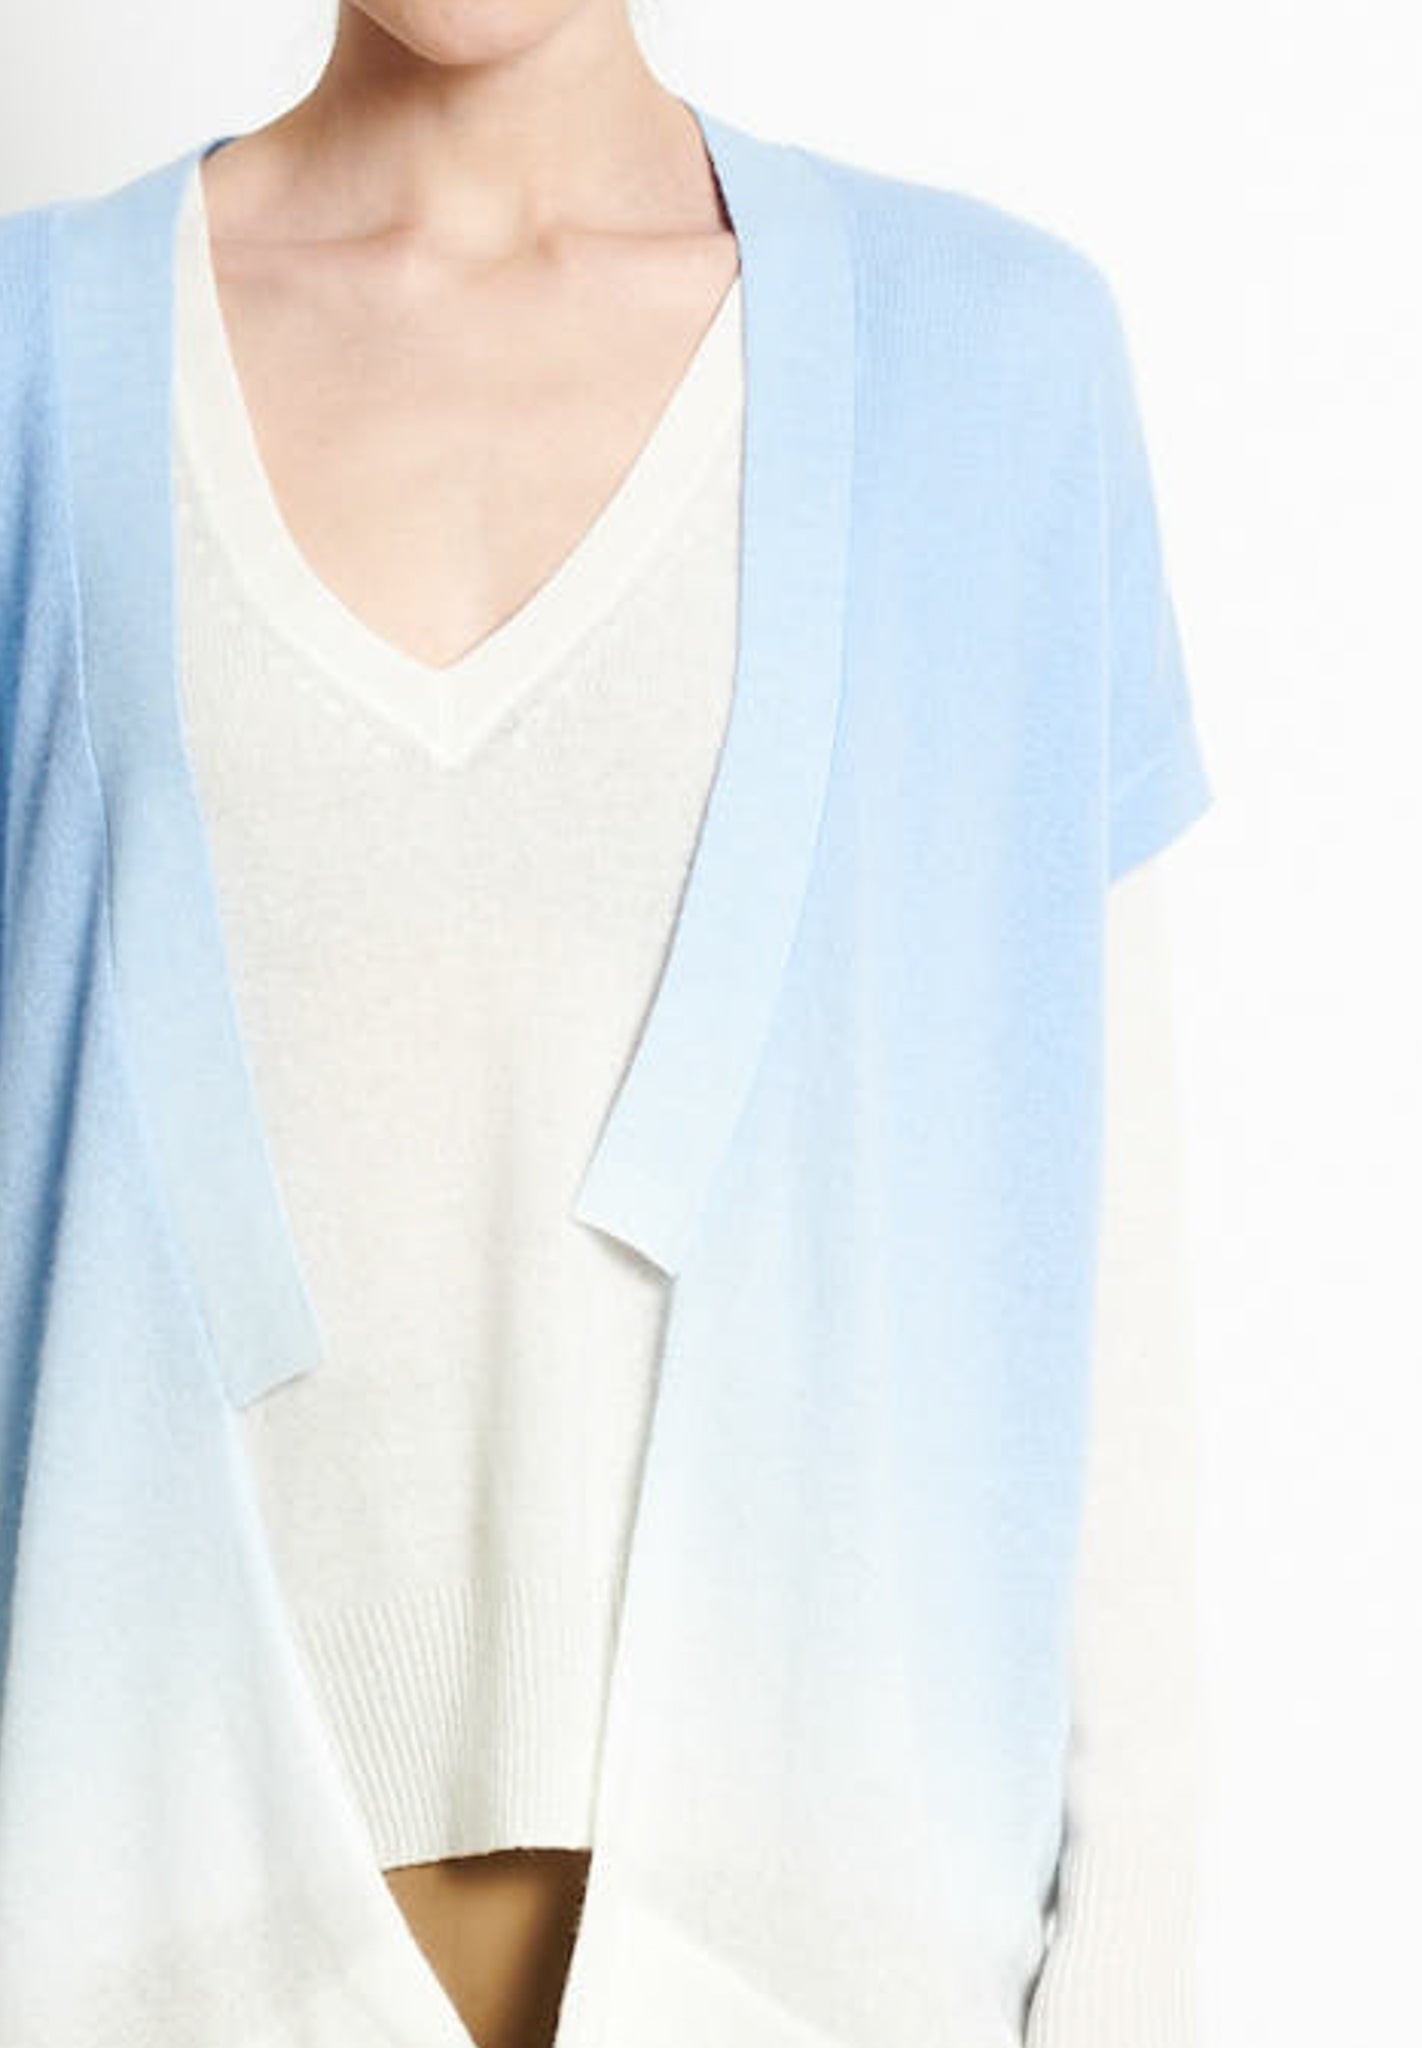 AVA 11 Kimono en cachemire tie & dye blanc écru imprimé bleu ciel